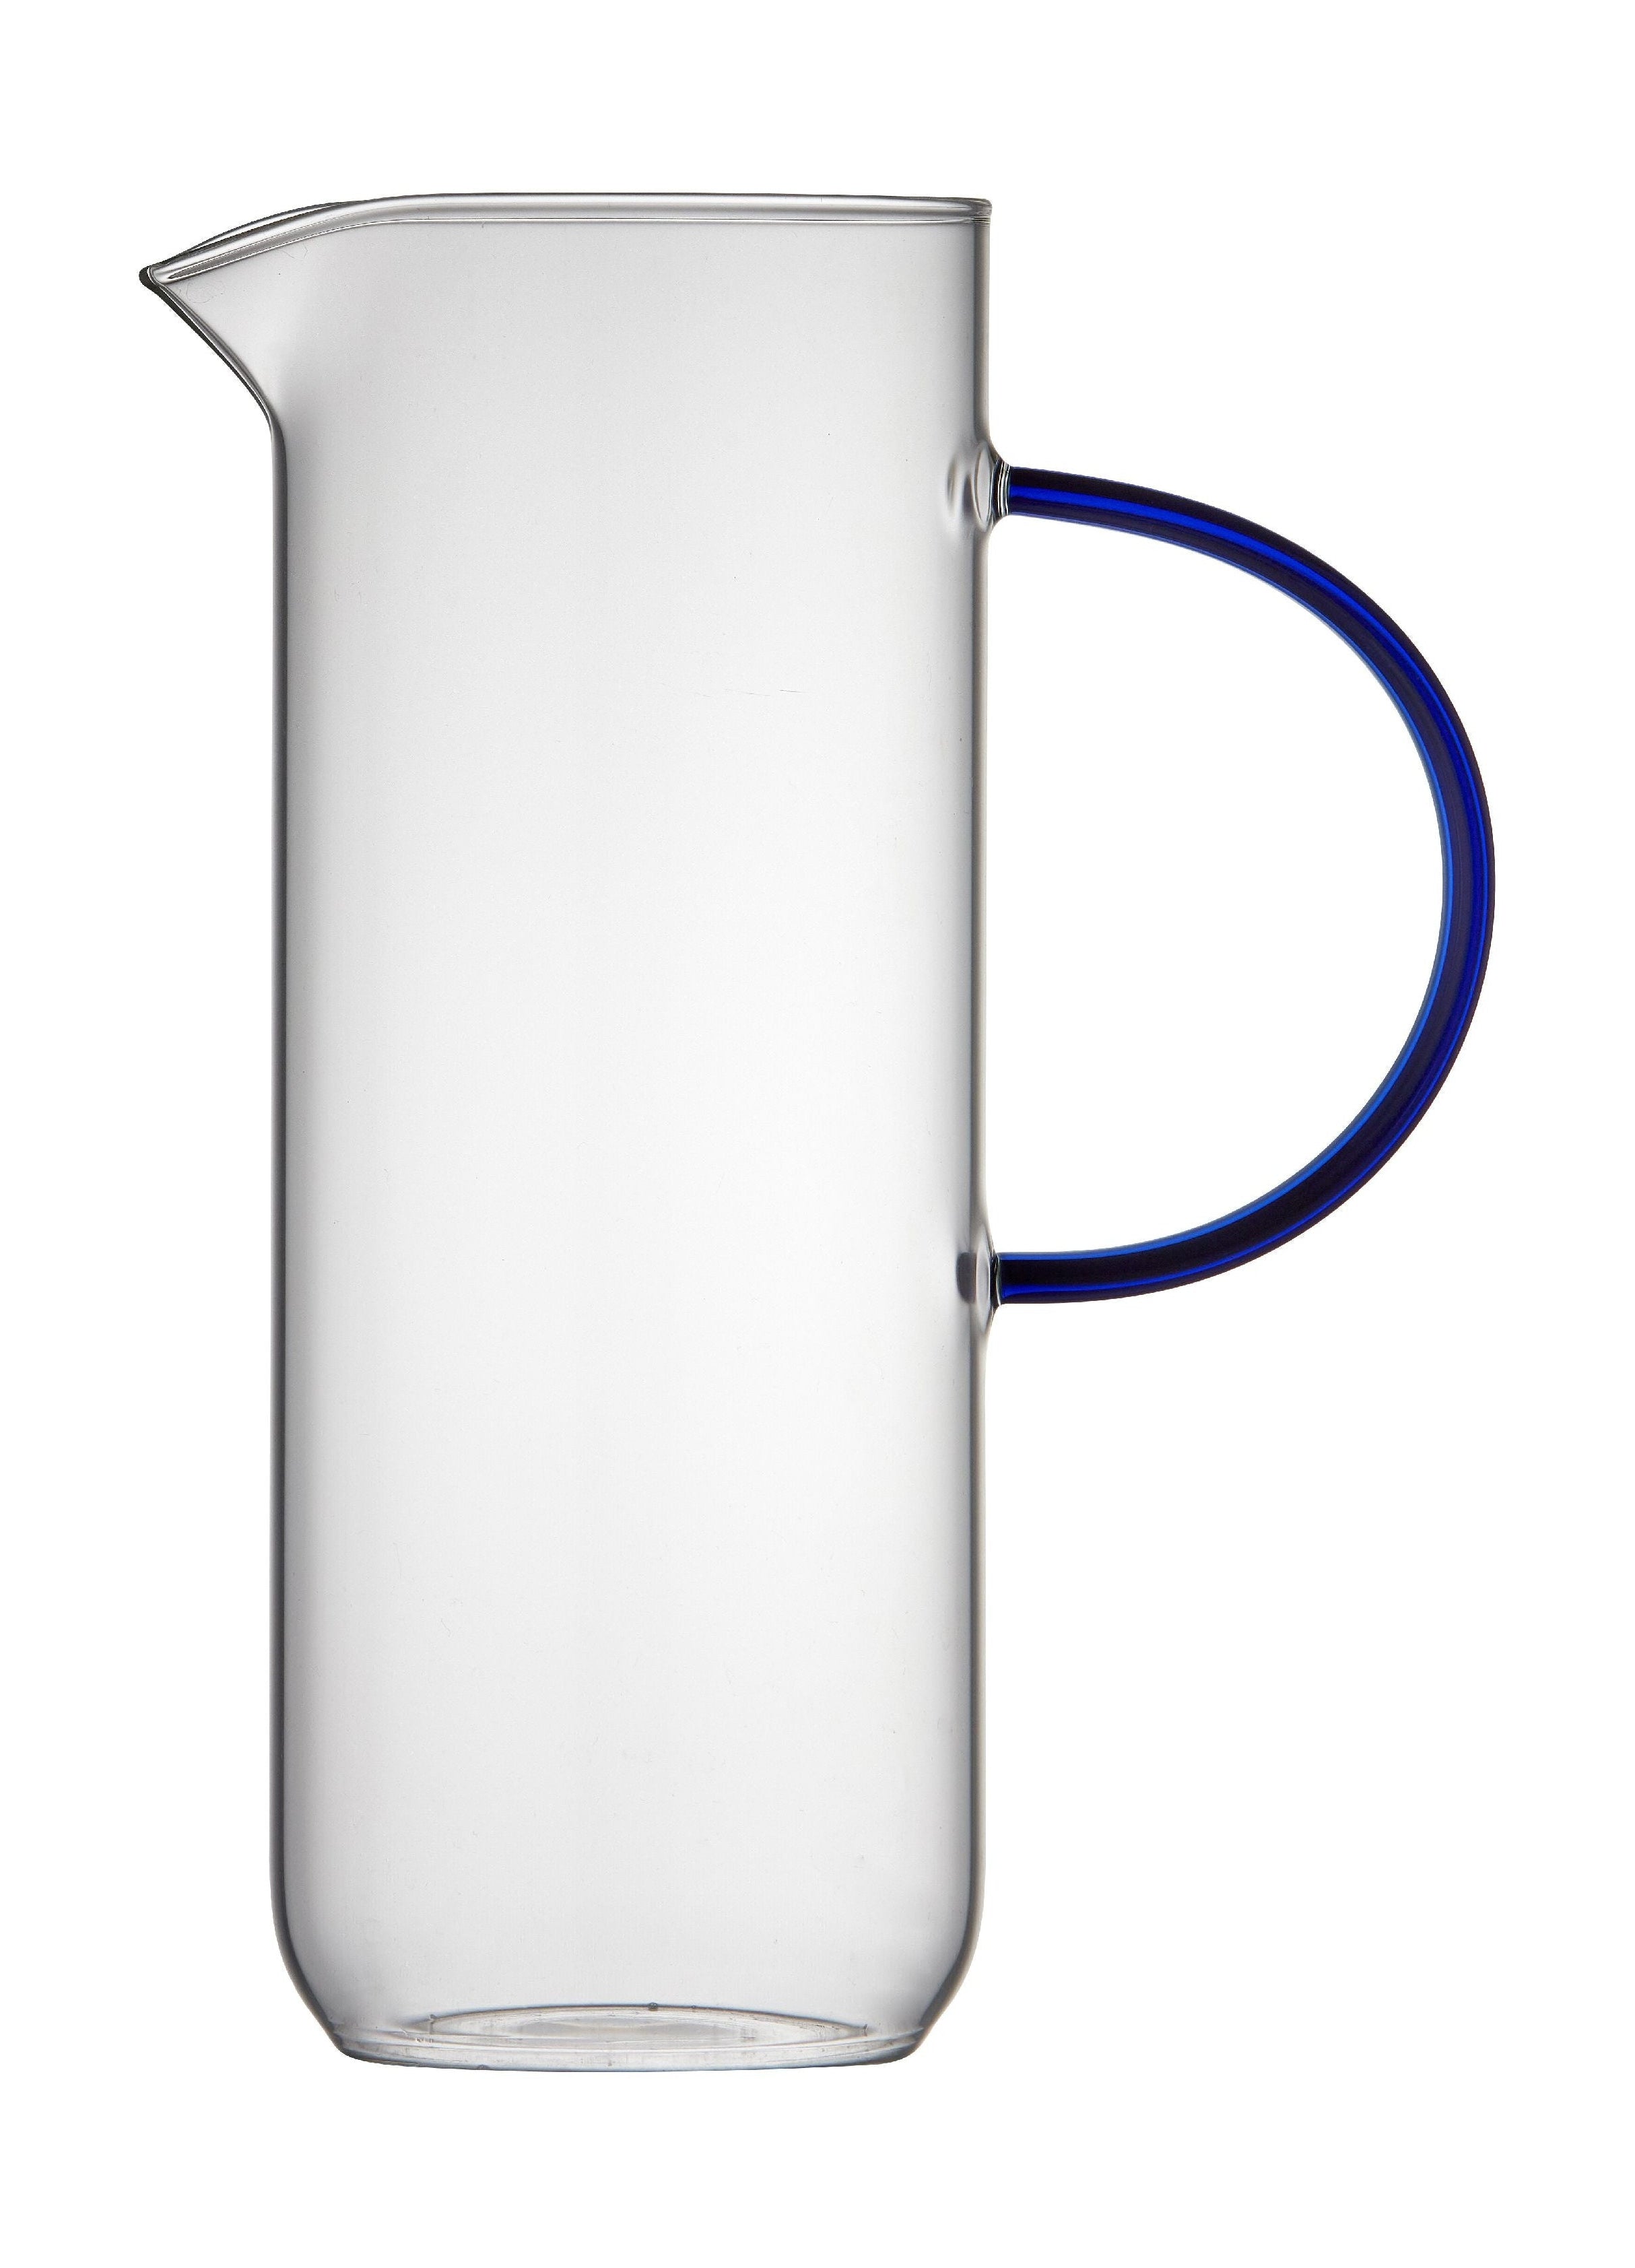 Lyngby Glas Torino Glass džbán 1,1 l, čistý/modrý